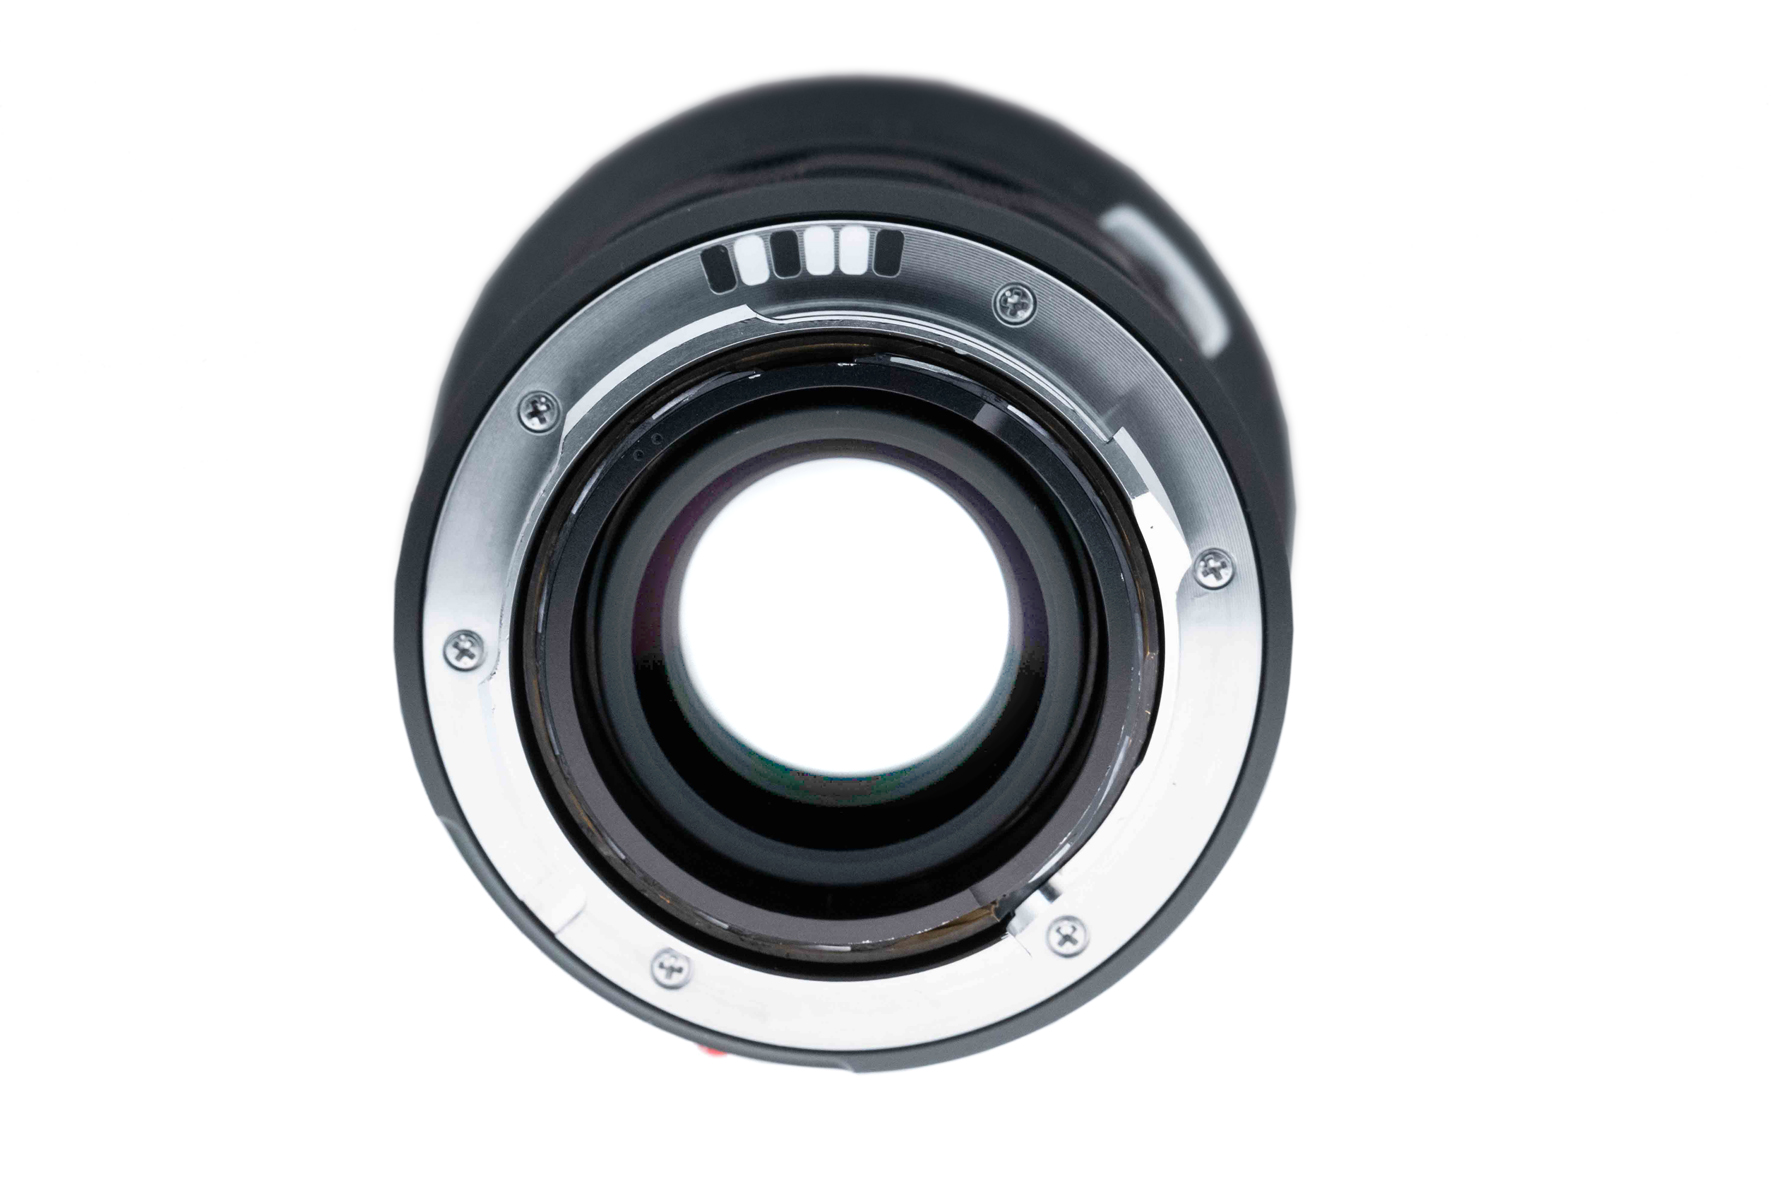 Leica APO-Summicron-M 2.0/50mm black chrome-plated 